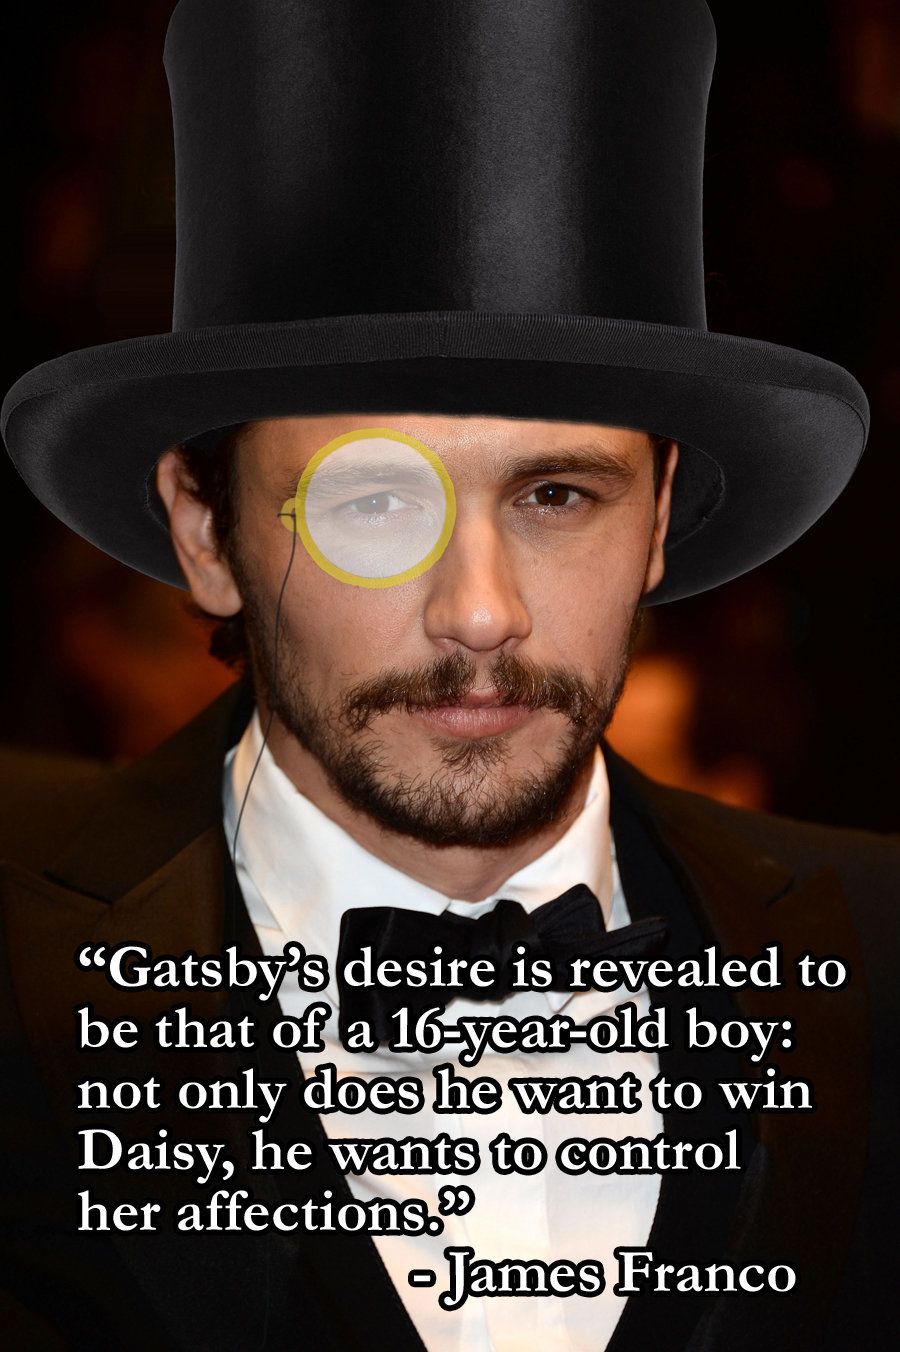 Franco on Gatsby's Desires